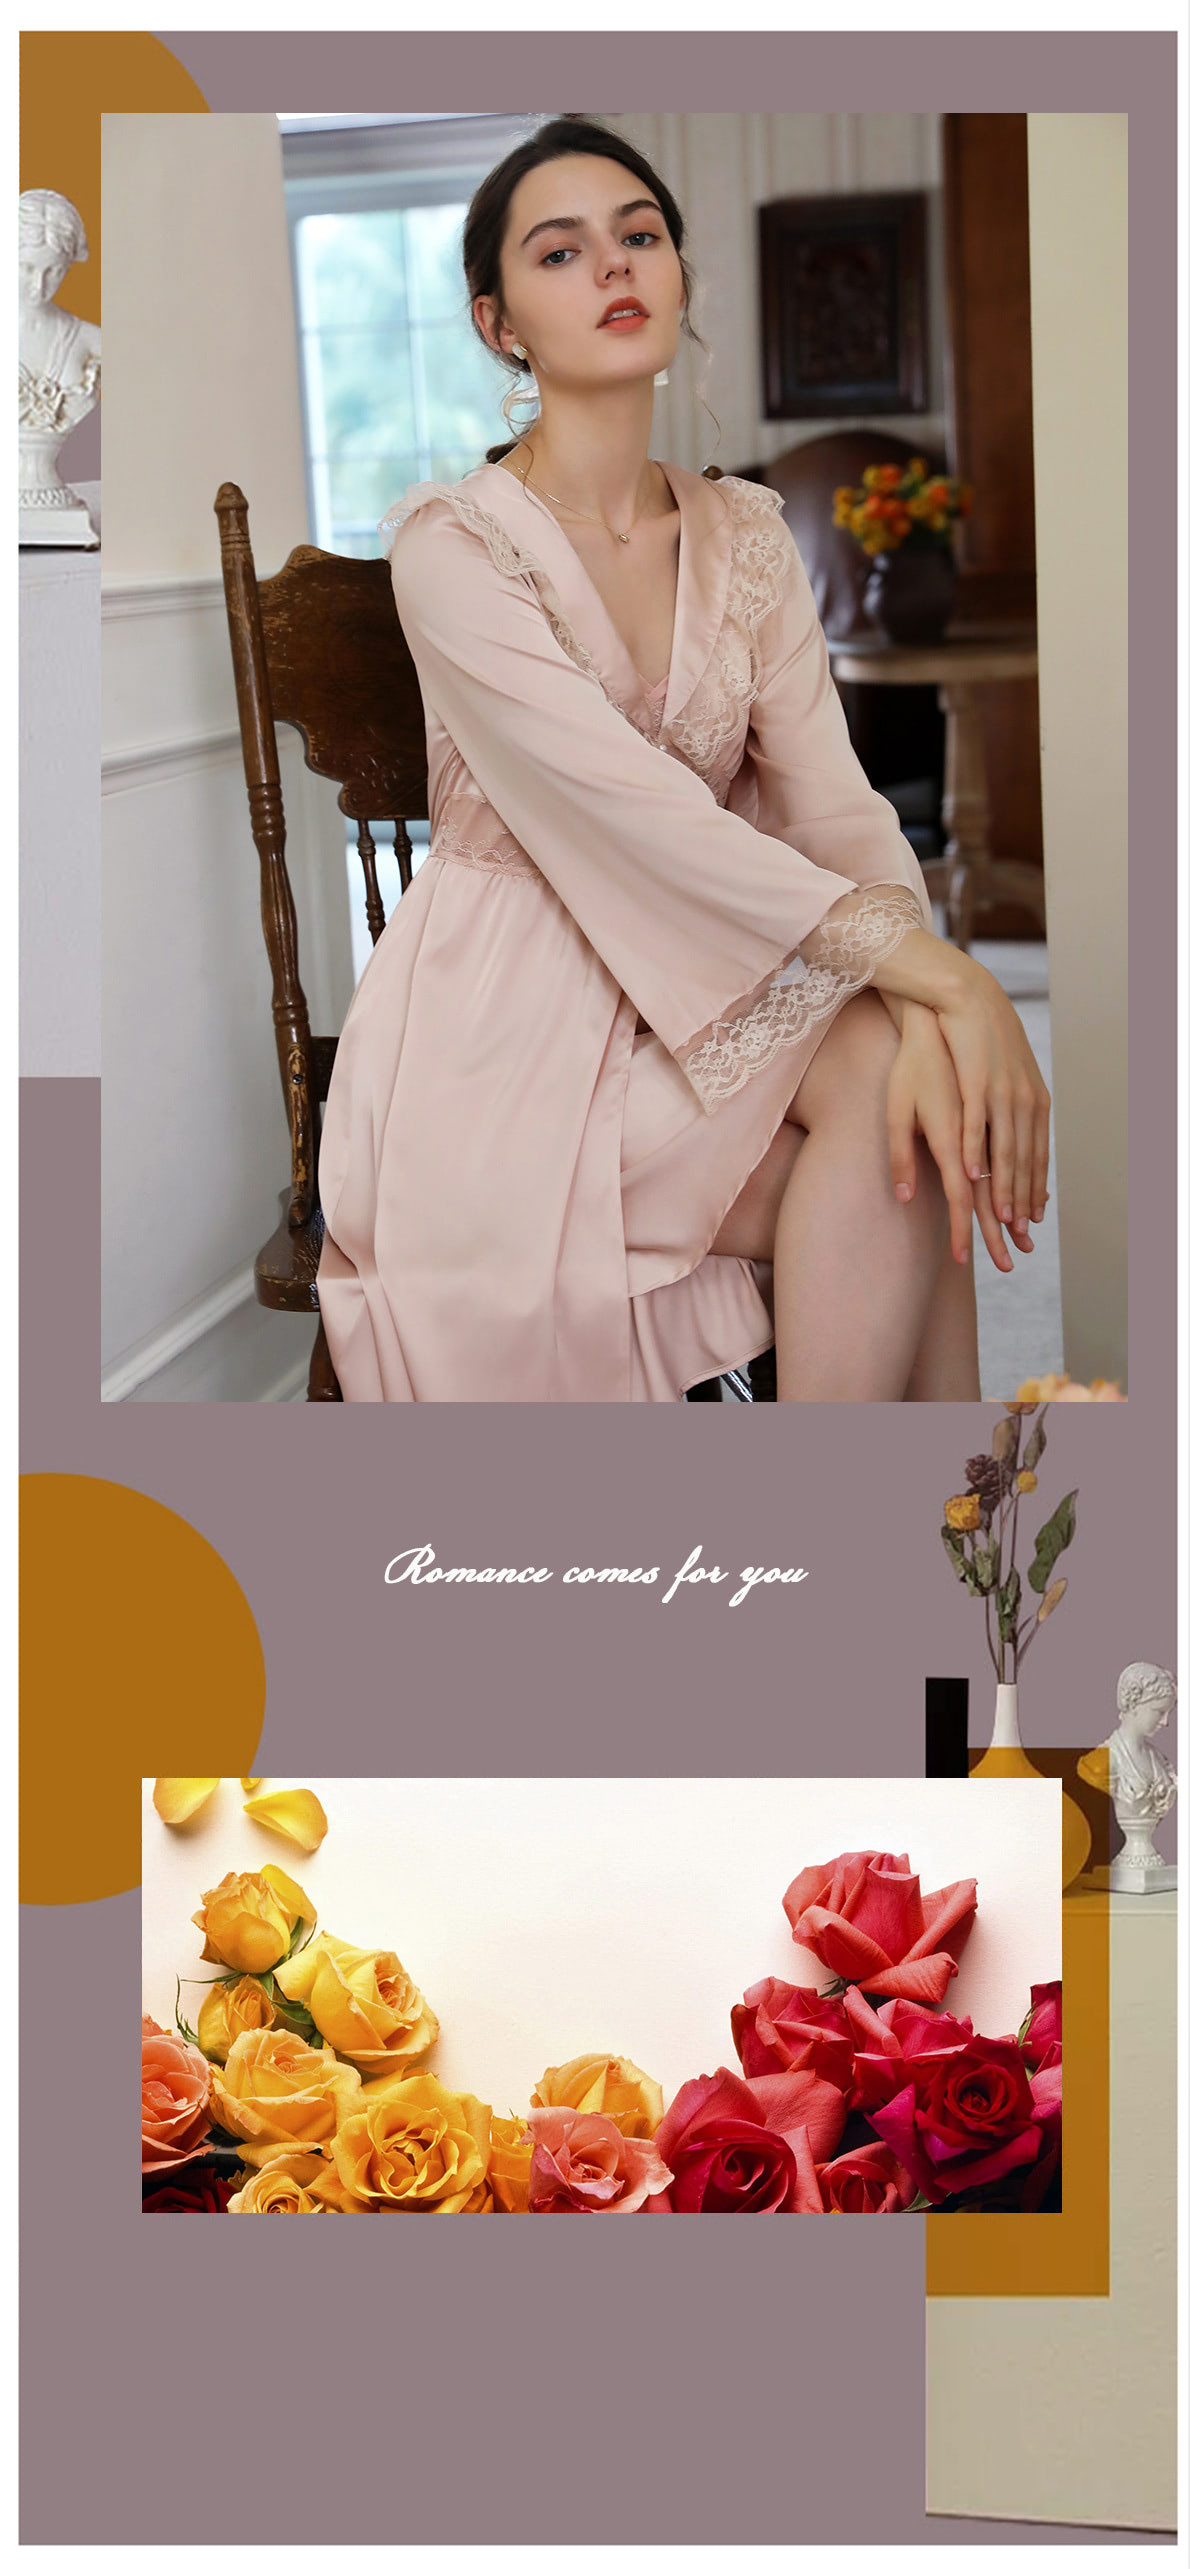 Vintage-Lace-Slip-Dress-Satin-Robe-Sleepwear-Home-Casual-Outift09.jpg